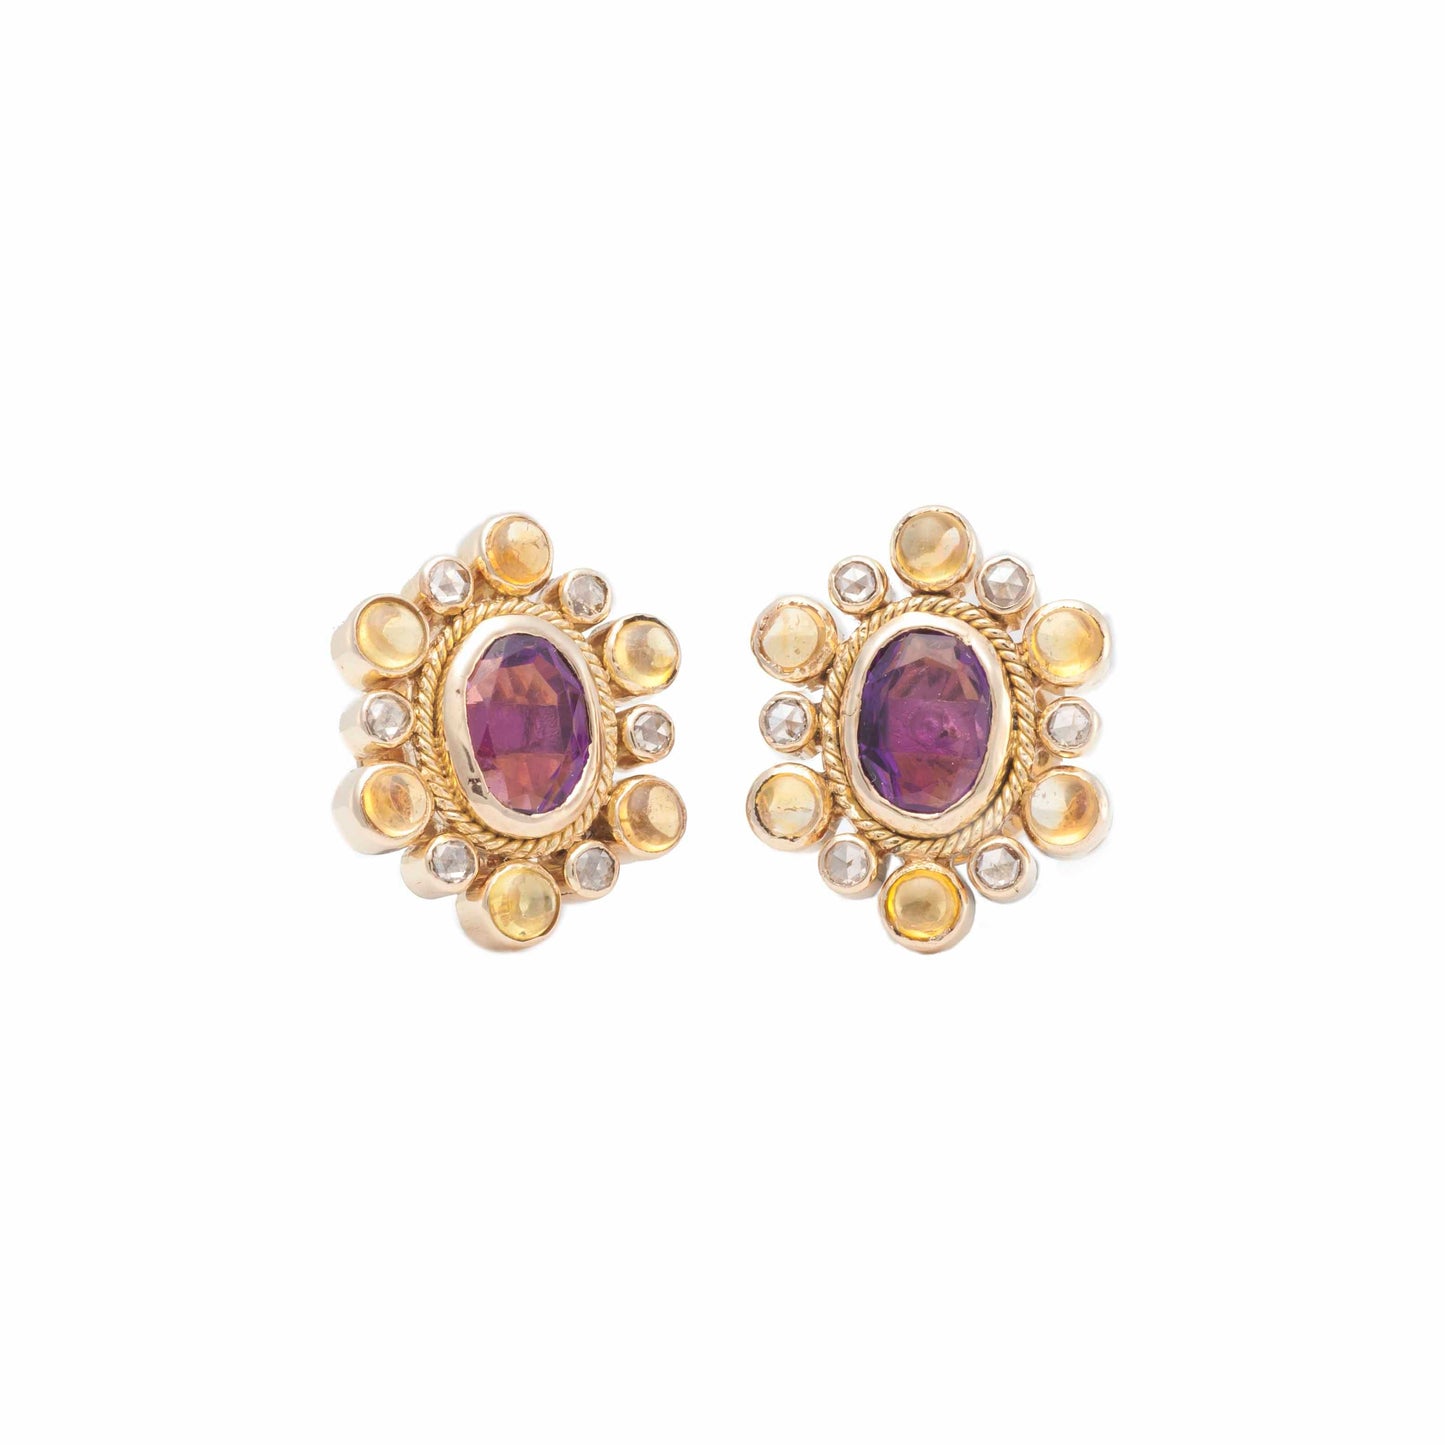 The Shakti Gold, Diamond, Ruby and Yellow Sapphire Ear Studs by Rasvihar